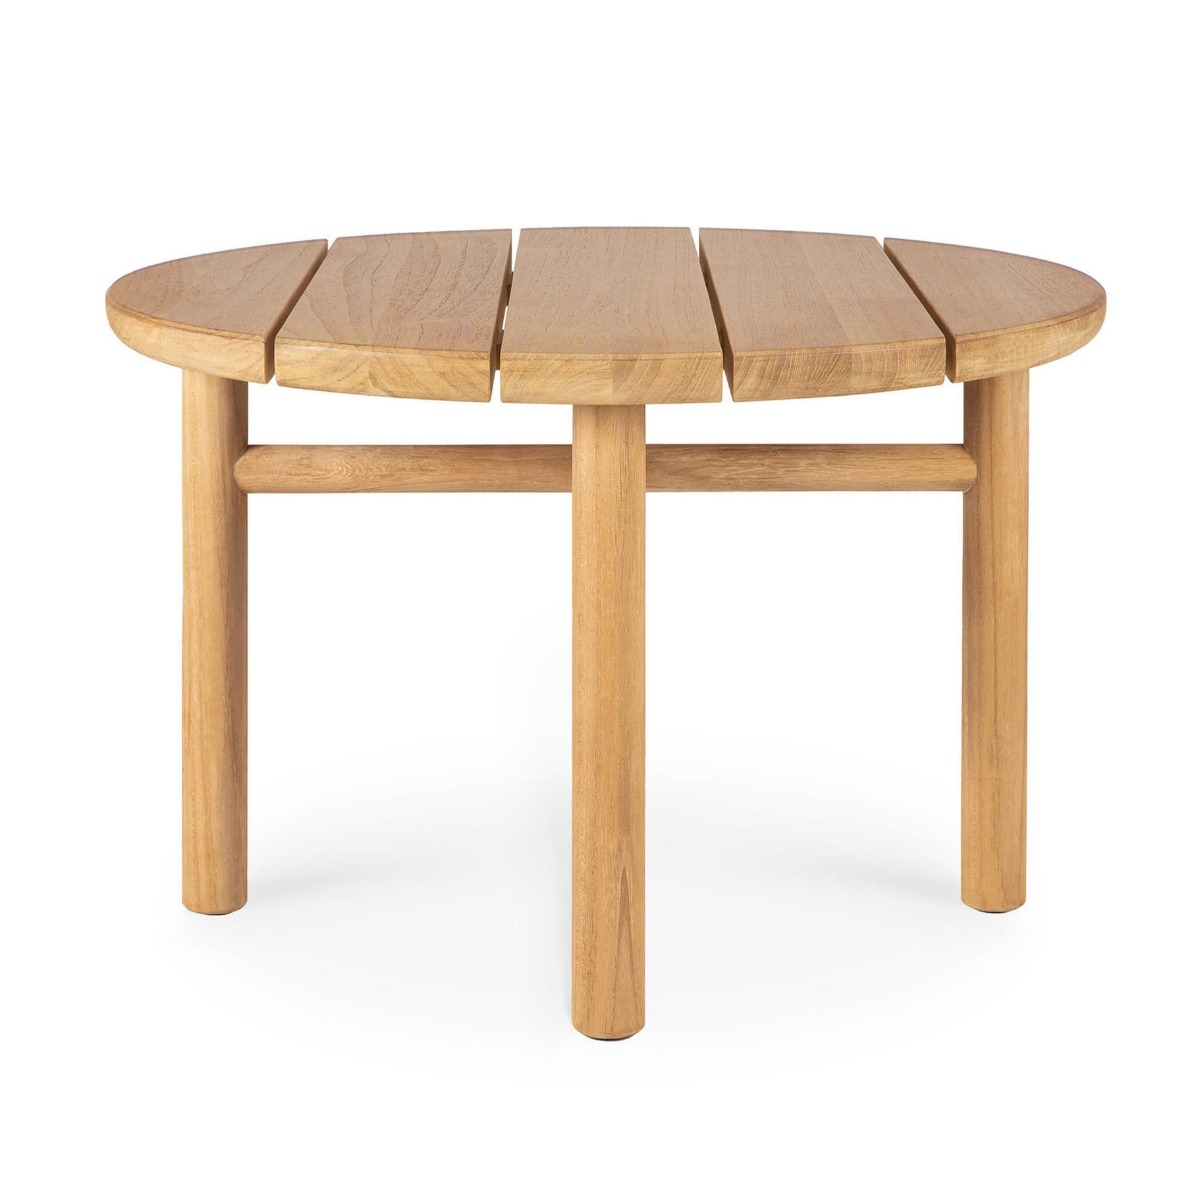 https://www.fundesign.nl/media/catalog/product/1/0/10264-teak-outdoor-quatro-coffee-table-front-cut-web-new-n-pro-b-arcit18.jpg